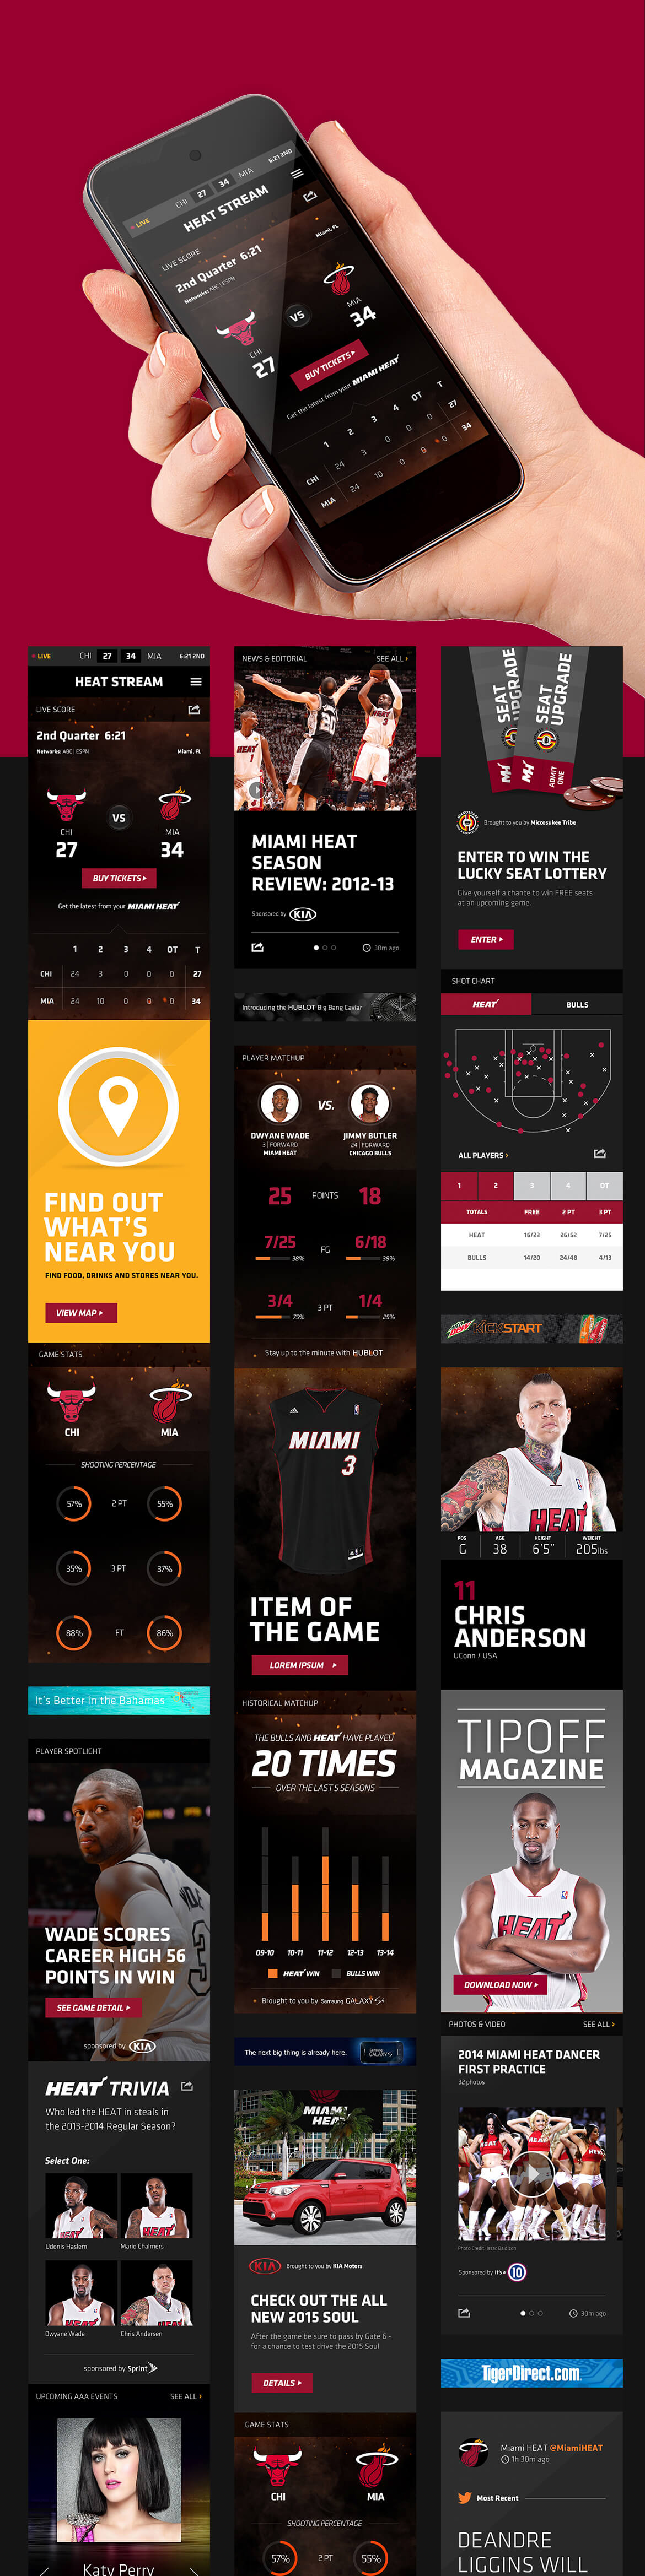 Miami Heat App